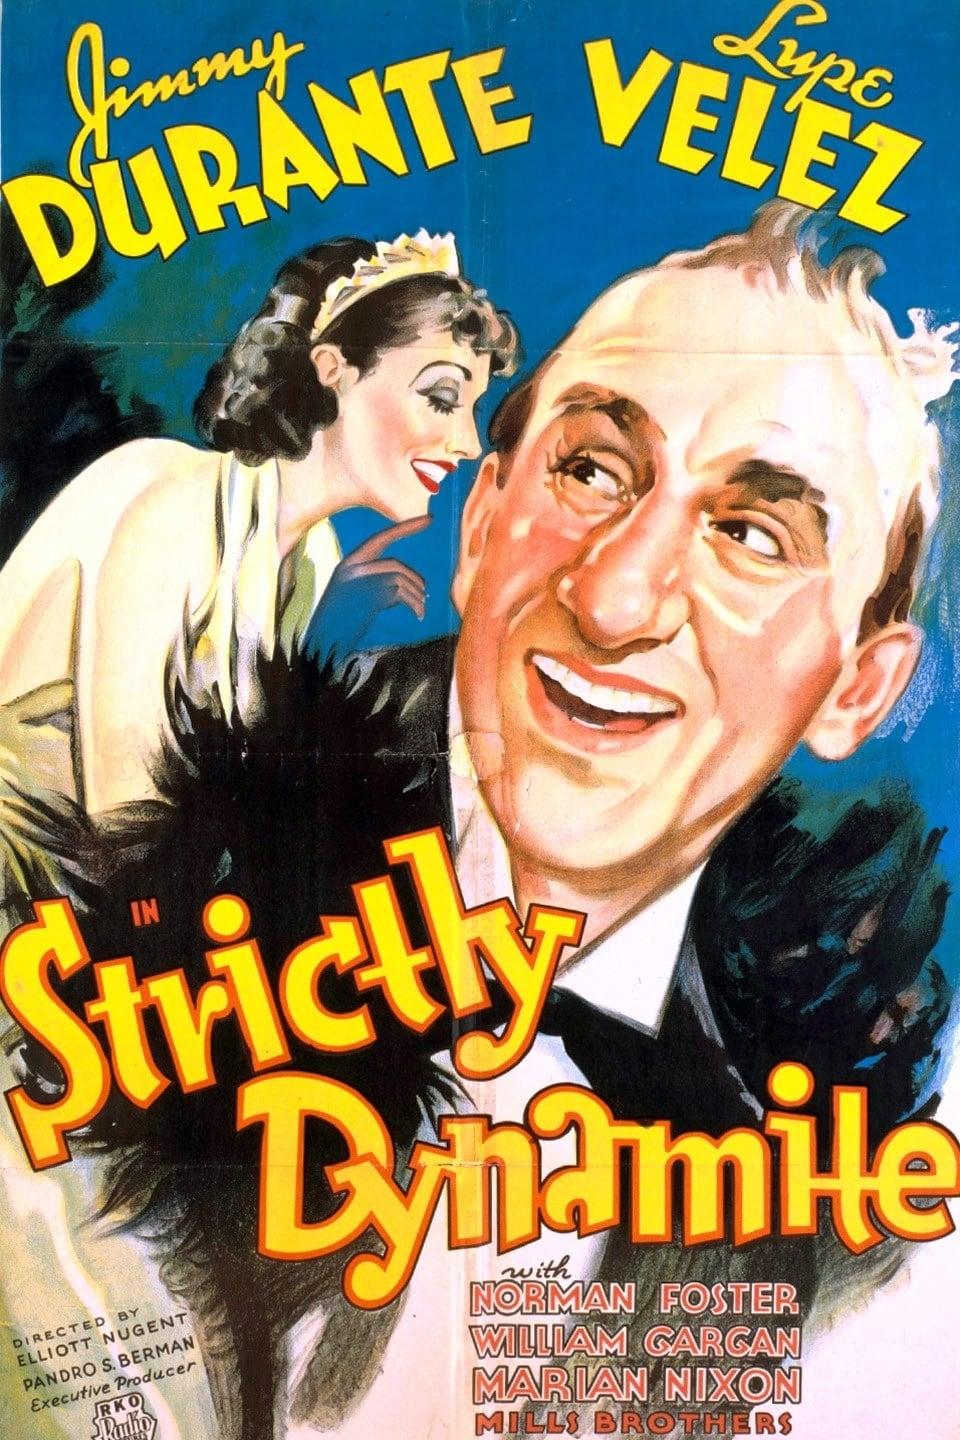 Strictly Dynamite poster